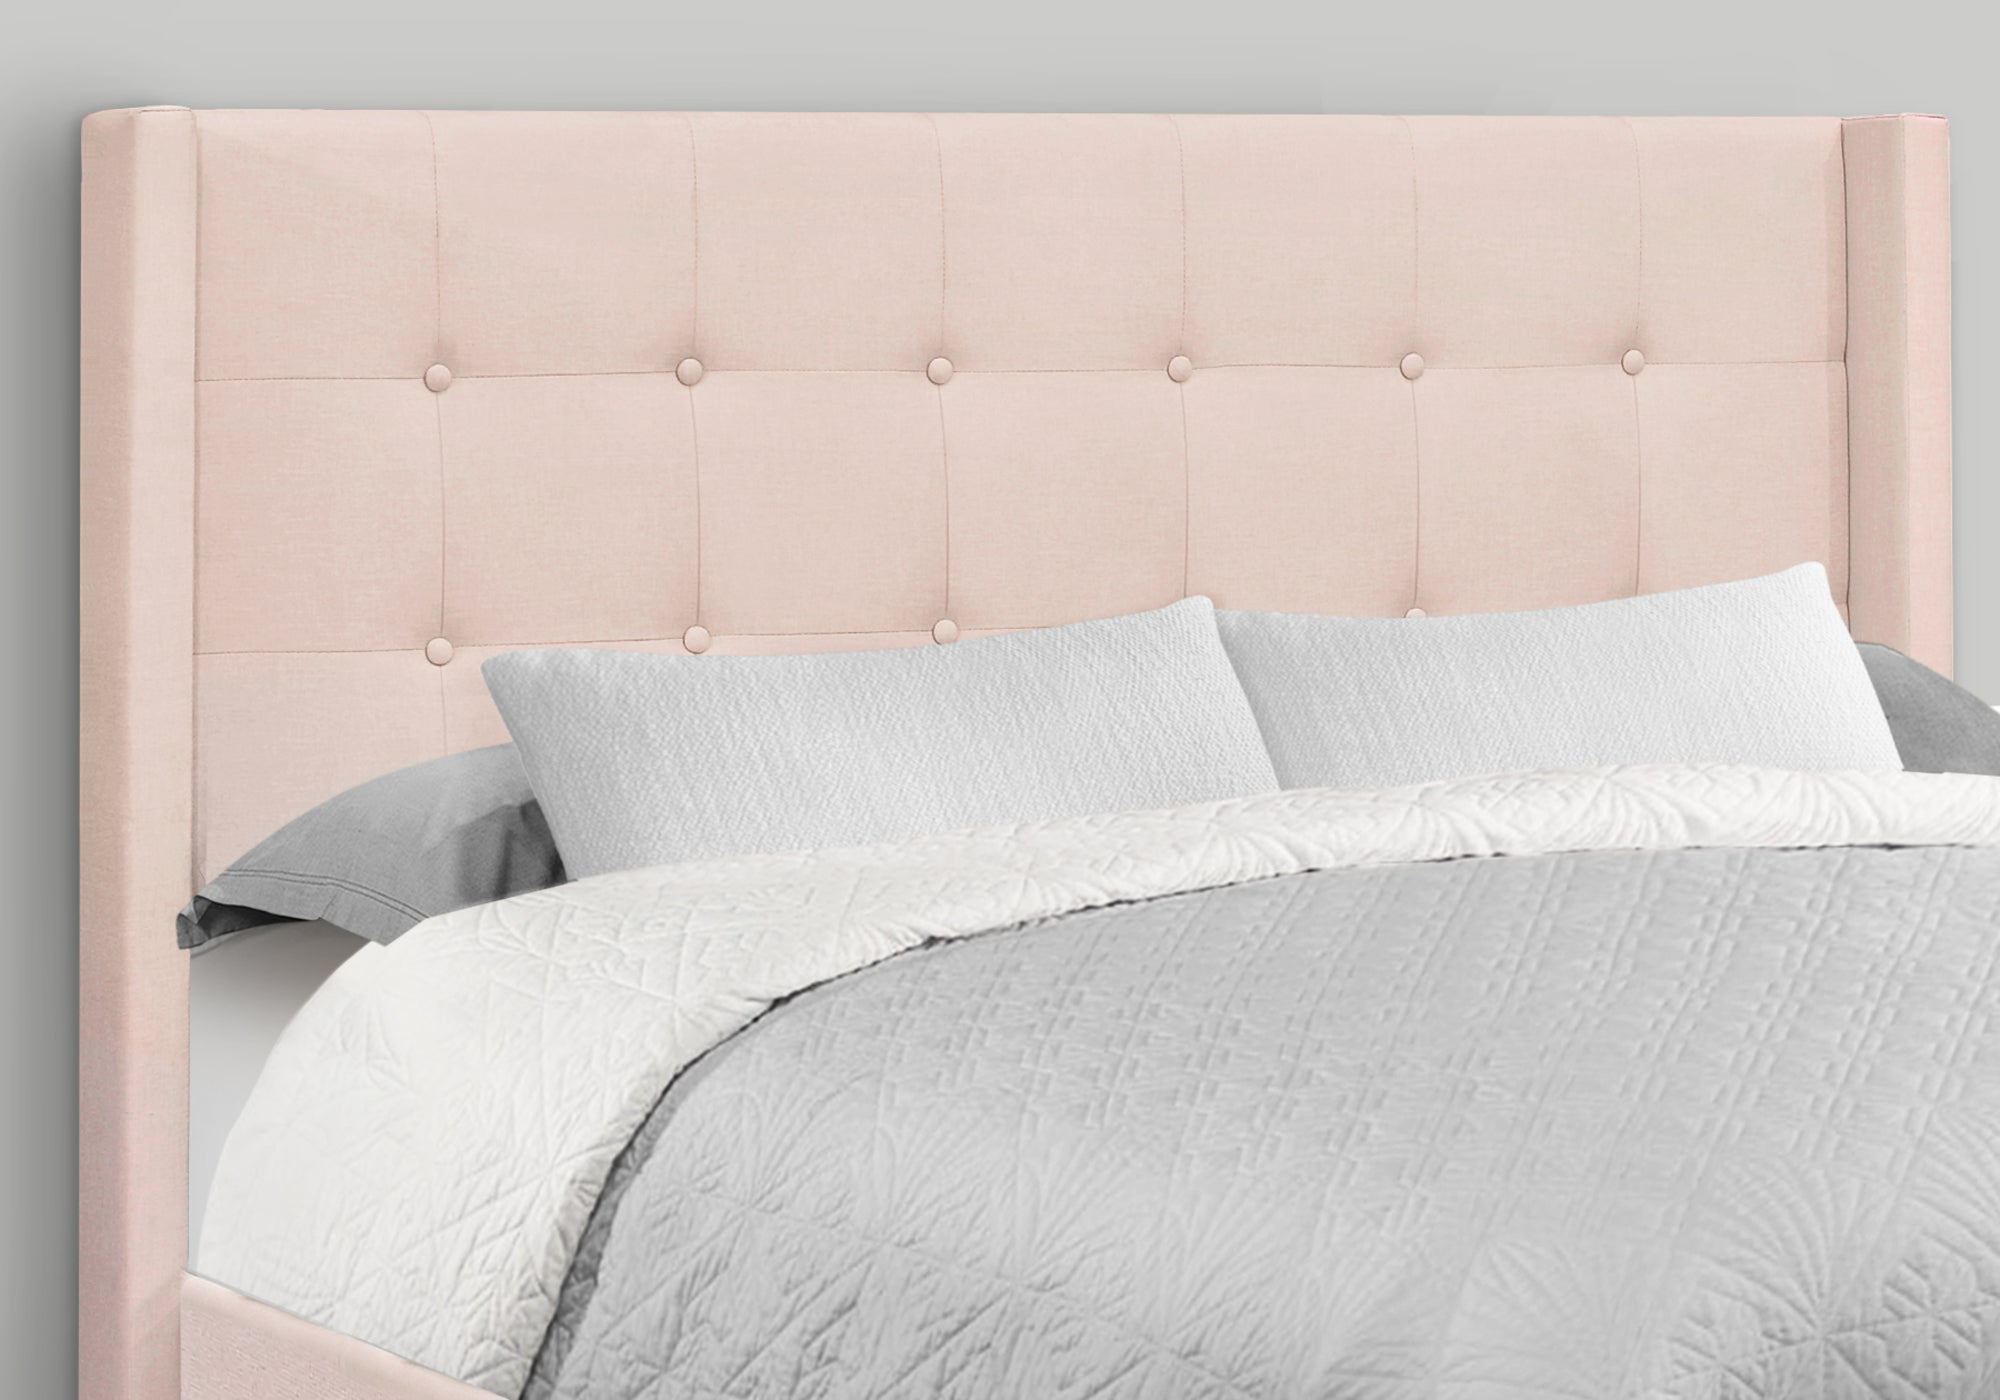 MN-936042Q    Bed, Queen Size, Bedroom, Upholstered, Pink Velvet, Chrome Metal Legs